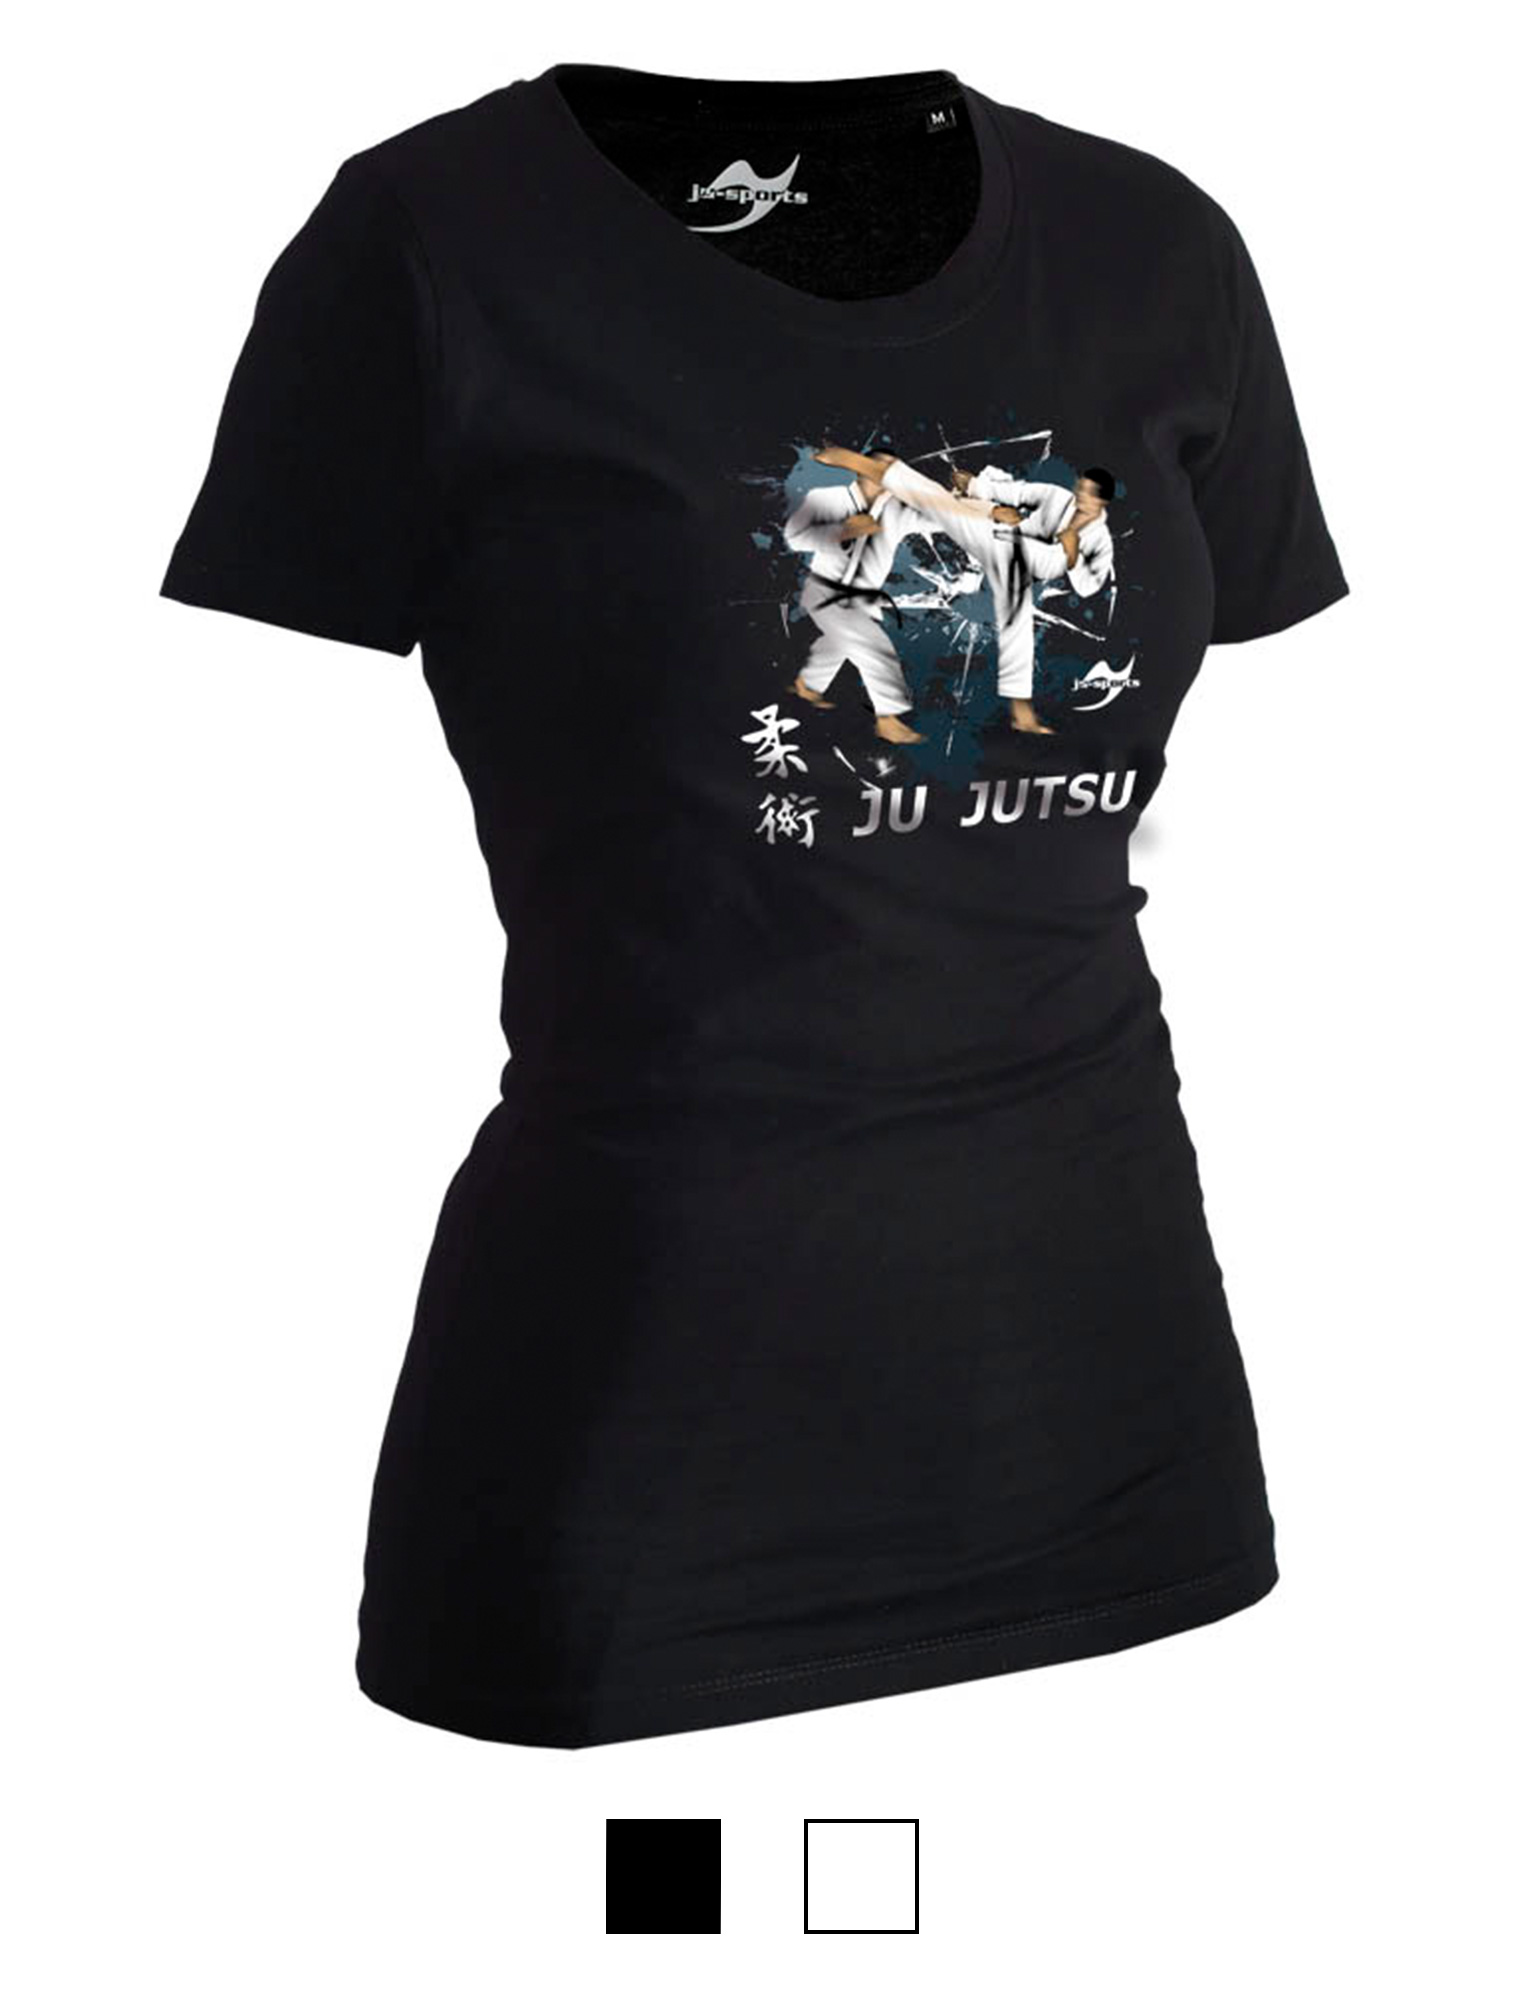 Ju-Sports Ju-Jutsu Shirt Artist black Lady